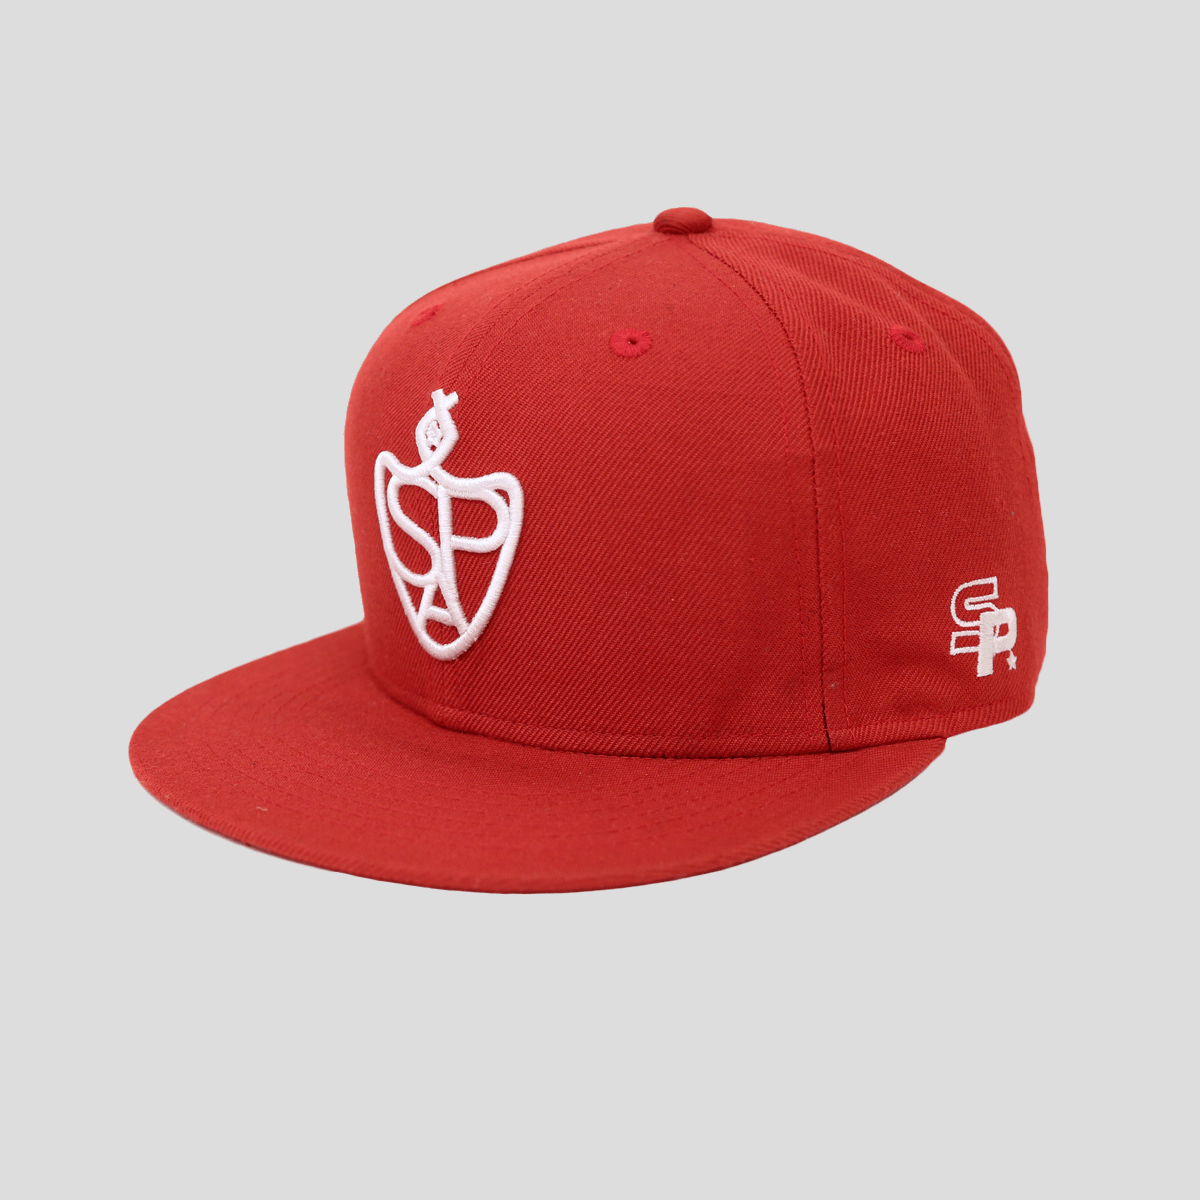 White with Red Sp Logo - SP Aeshtetics 'Emblem Lifestyle' Snapback Hat – Red / White – SP ...